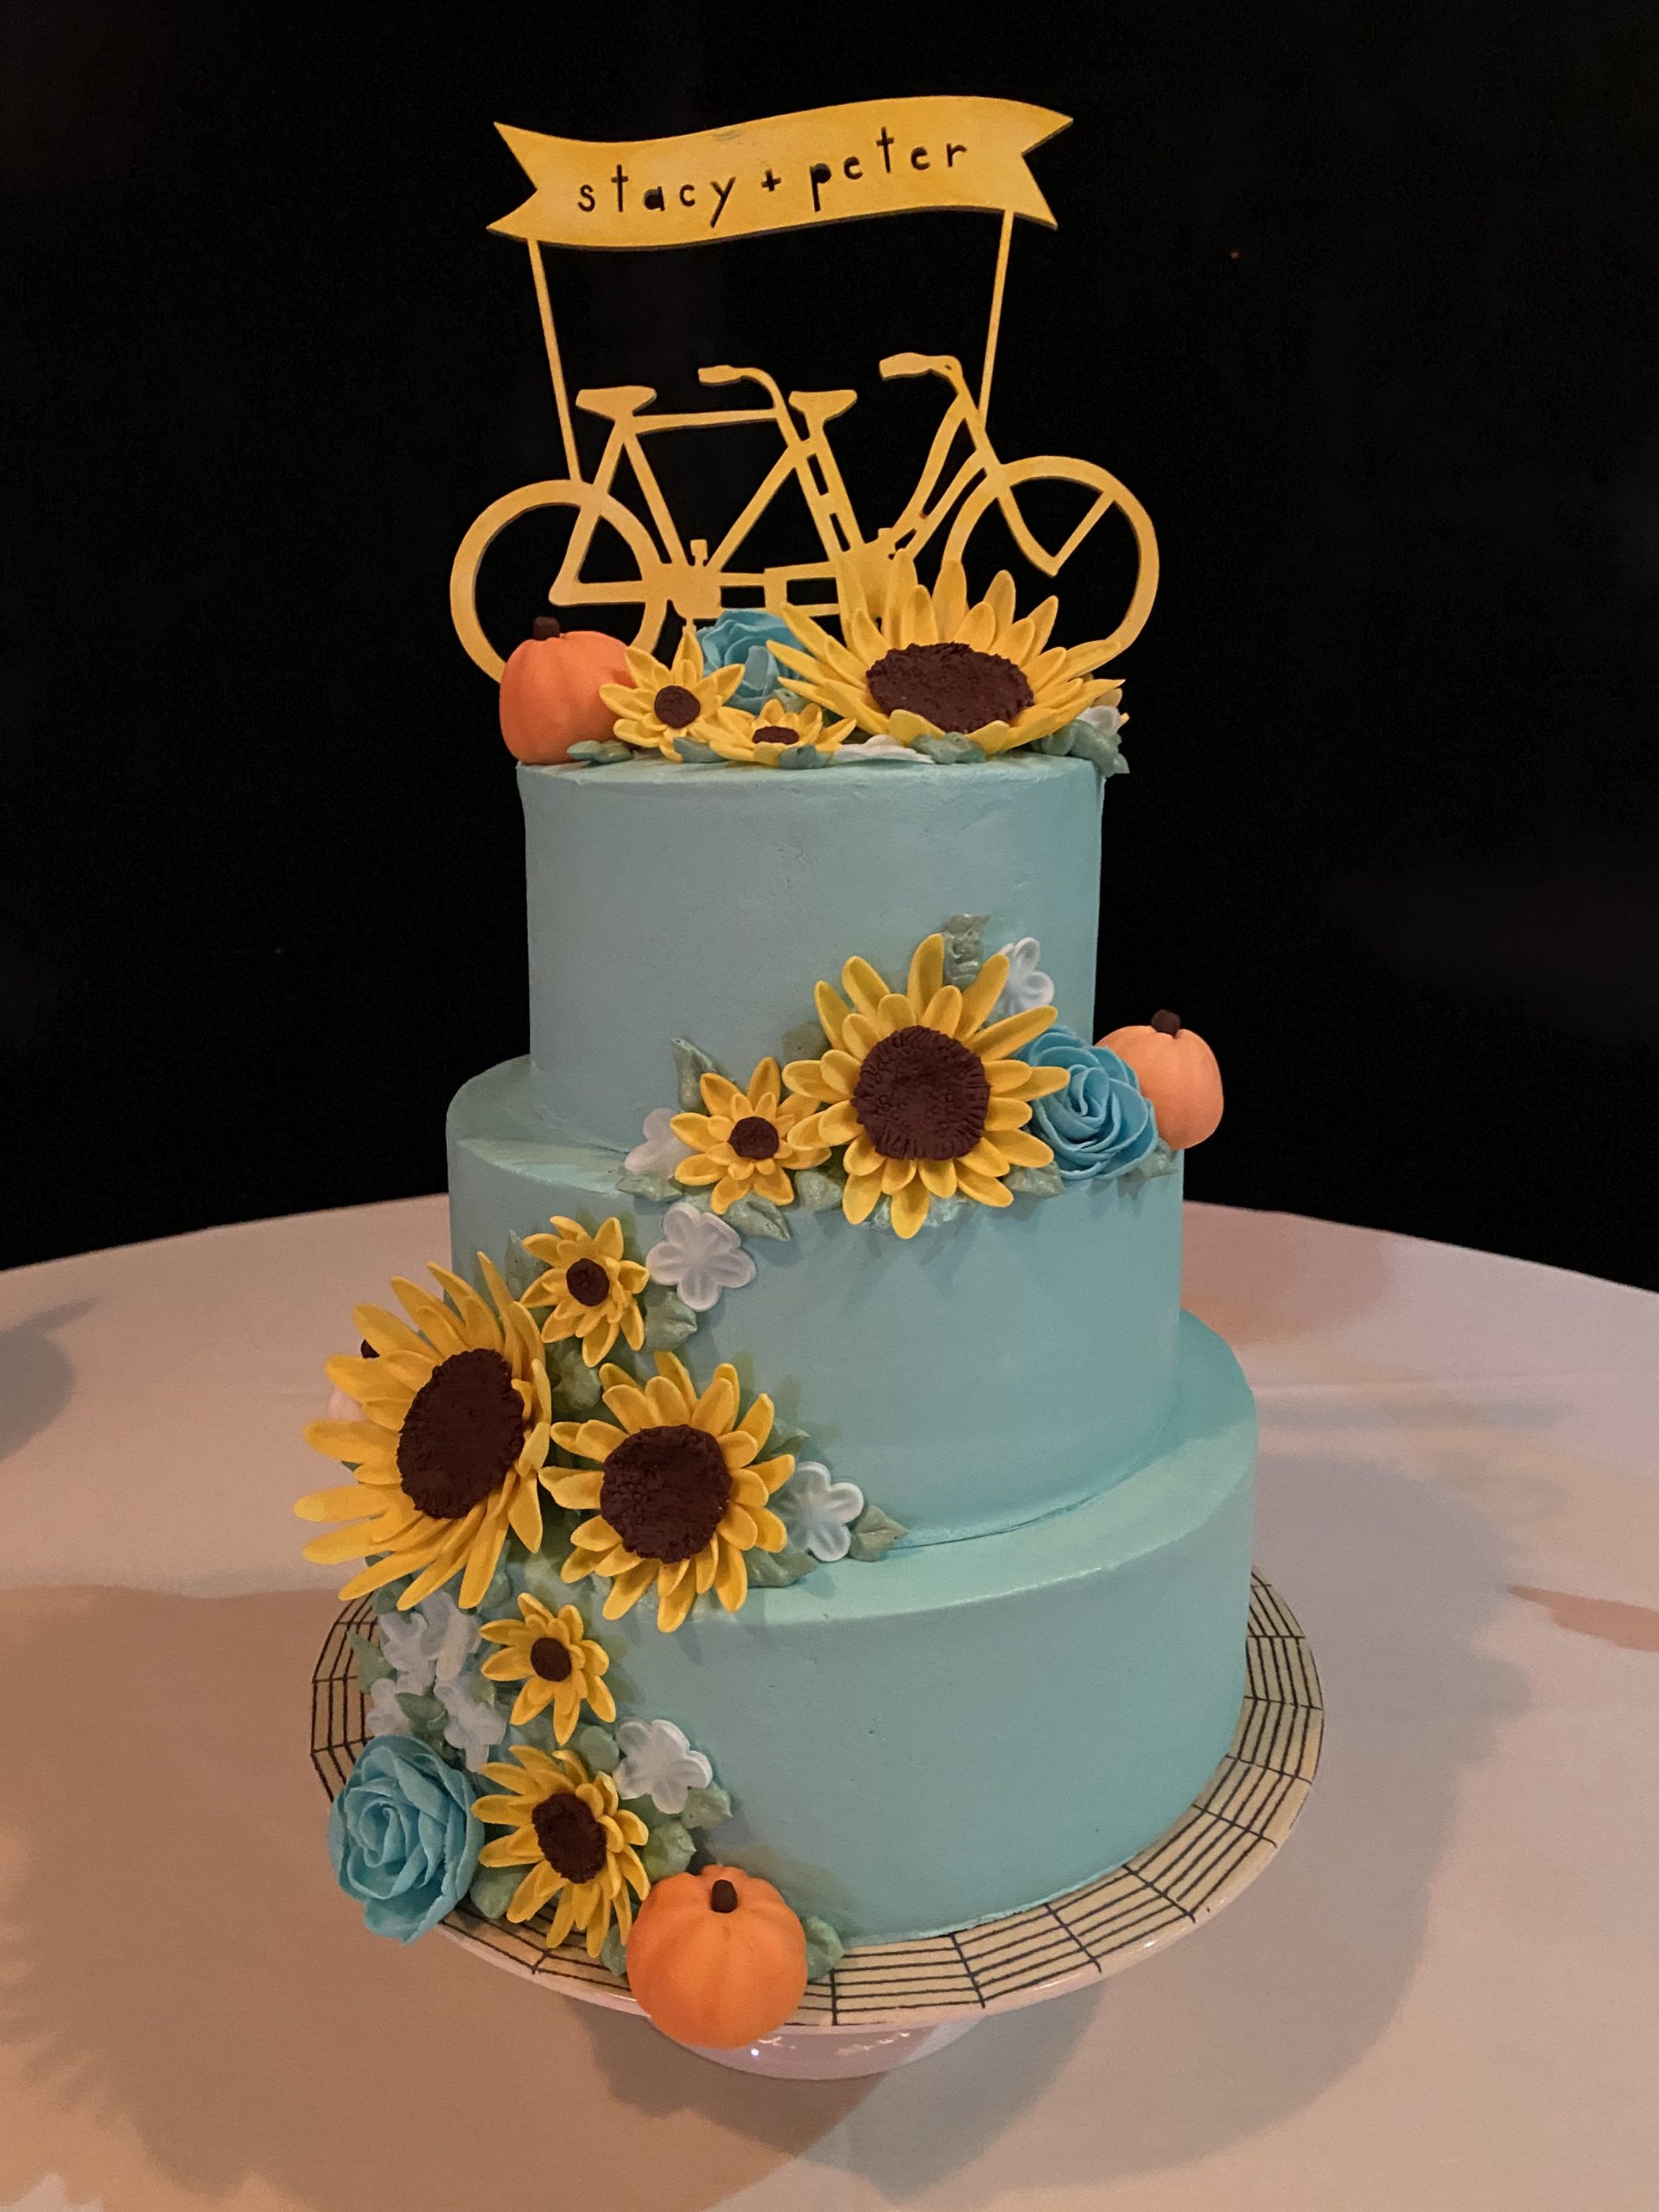 A beautiful 3-tier custom vegan wedding cake with fondant flowers from Village Patisserie in Toledo, Ohio